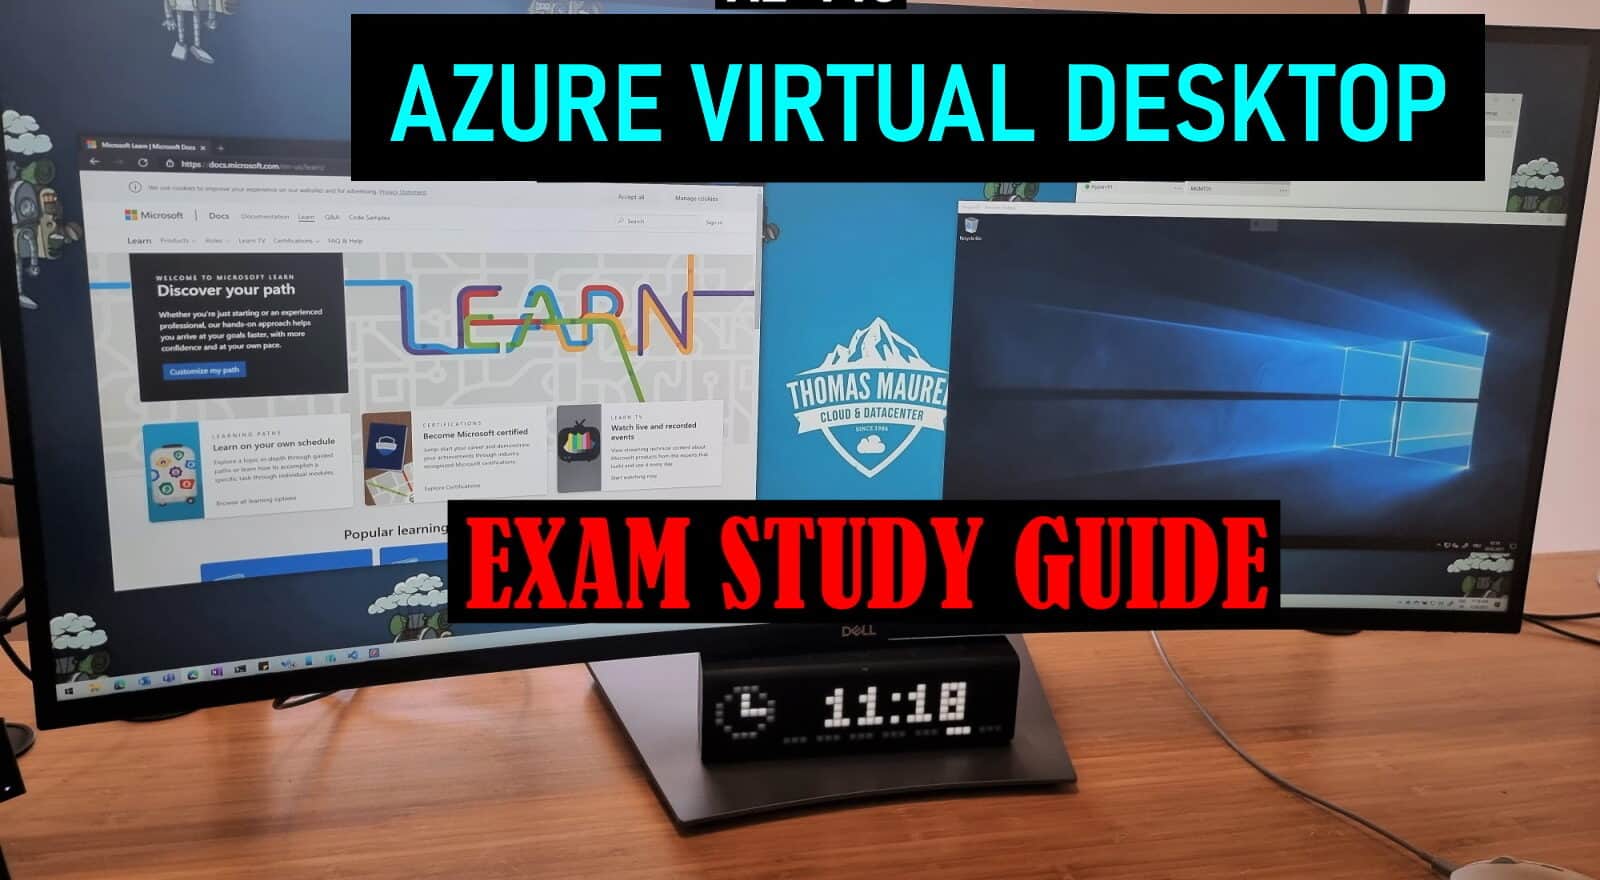 AZ-140 Exam Study Guide Azure Virtual Desktop WVD